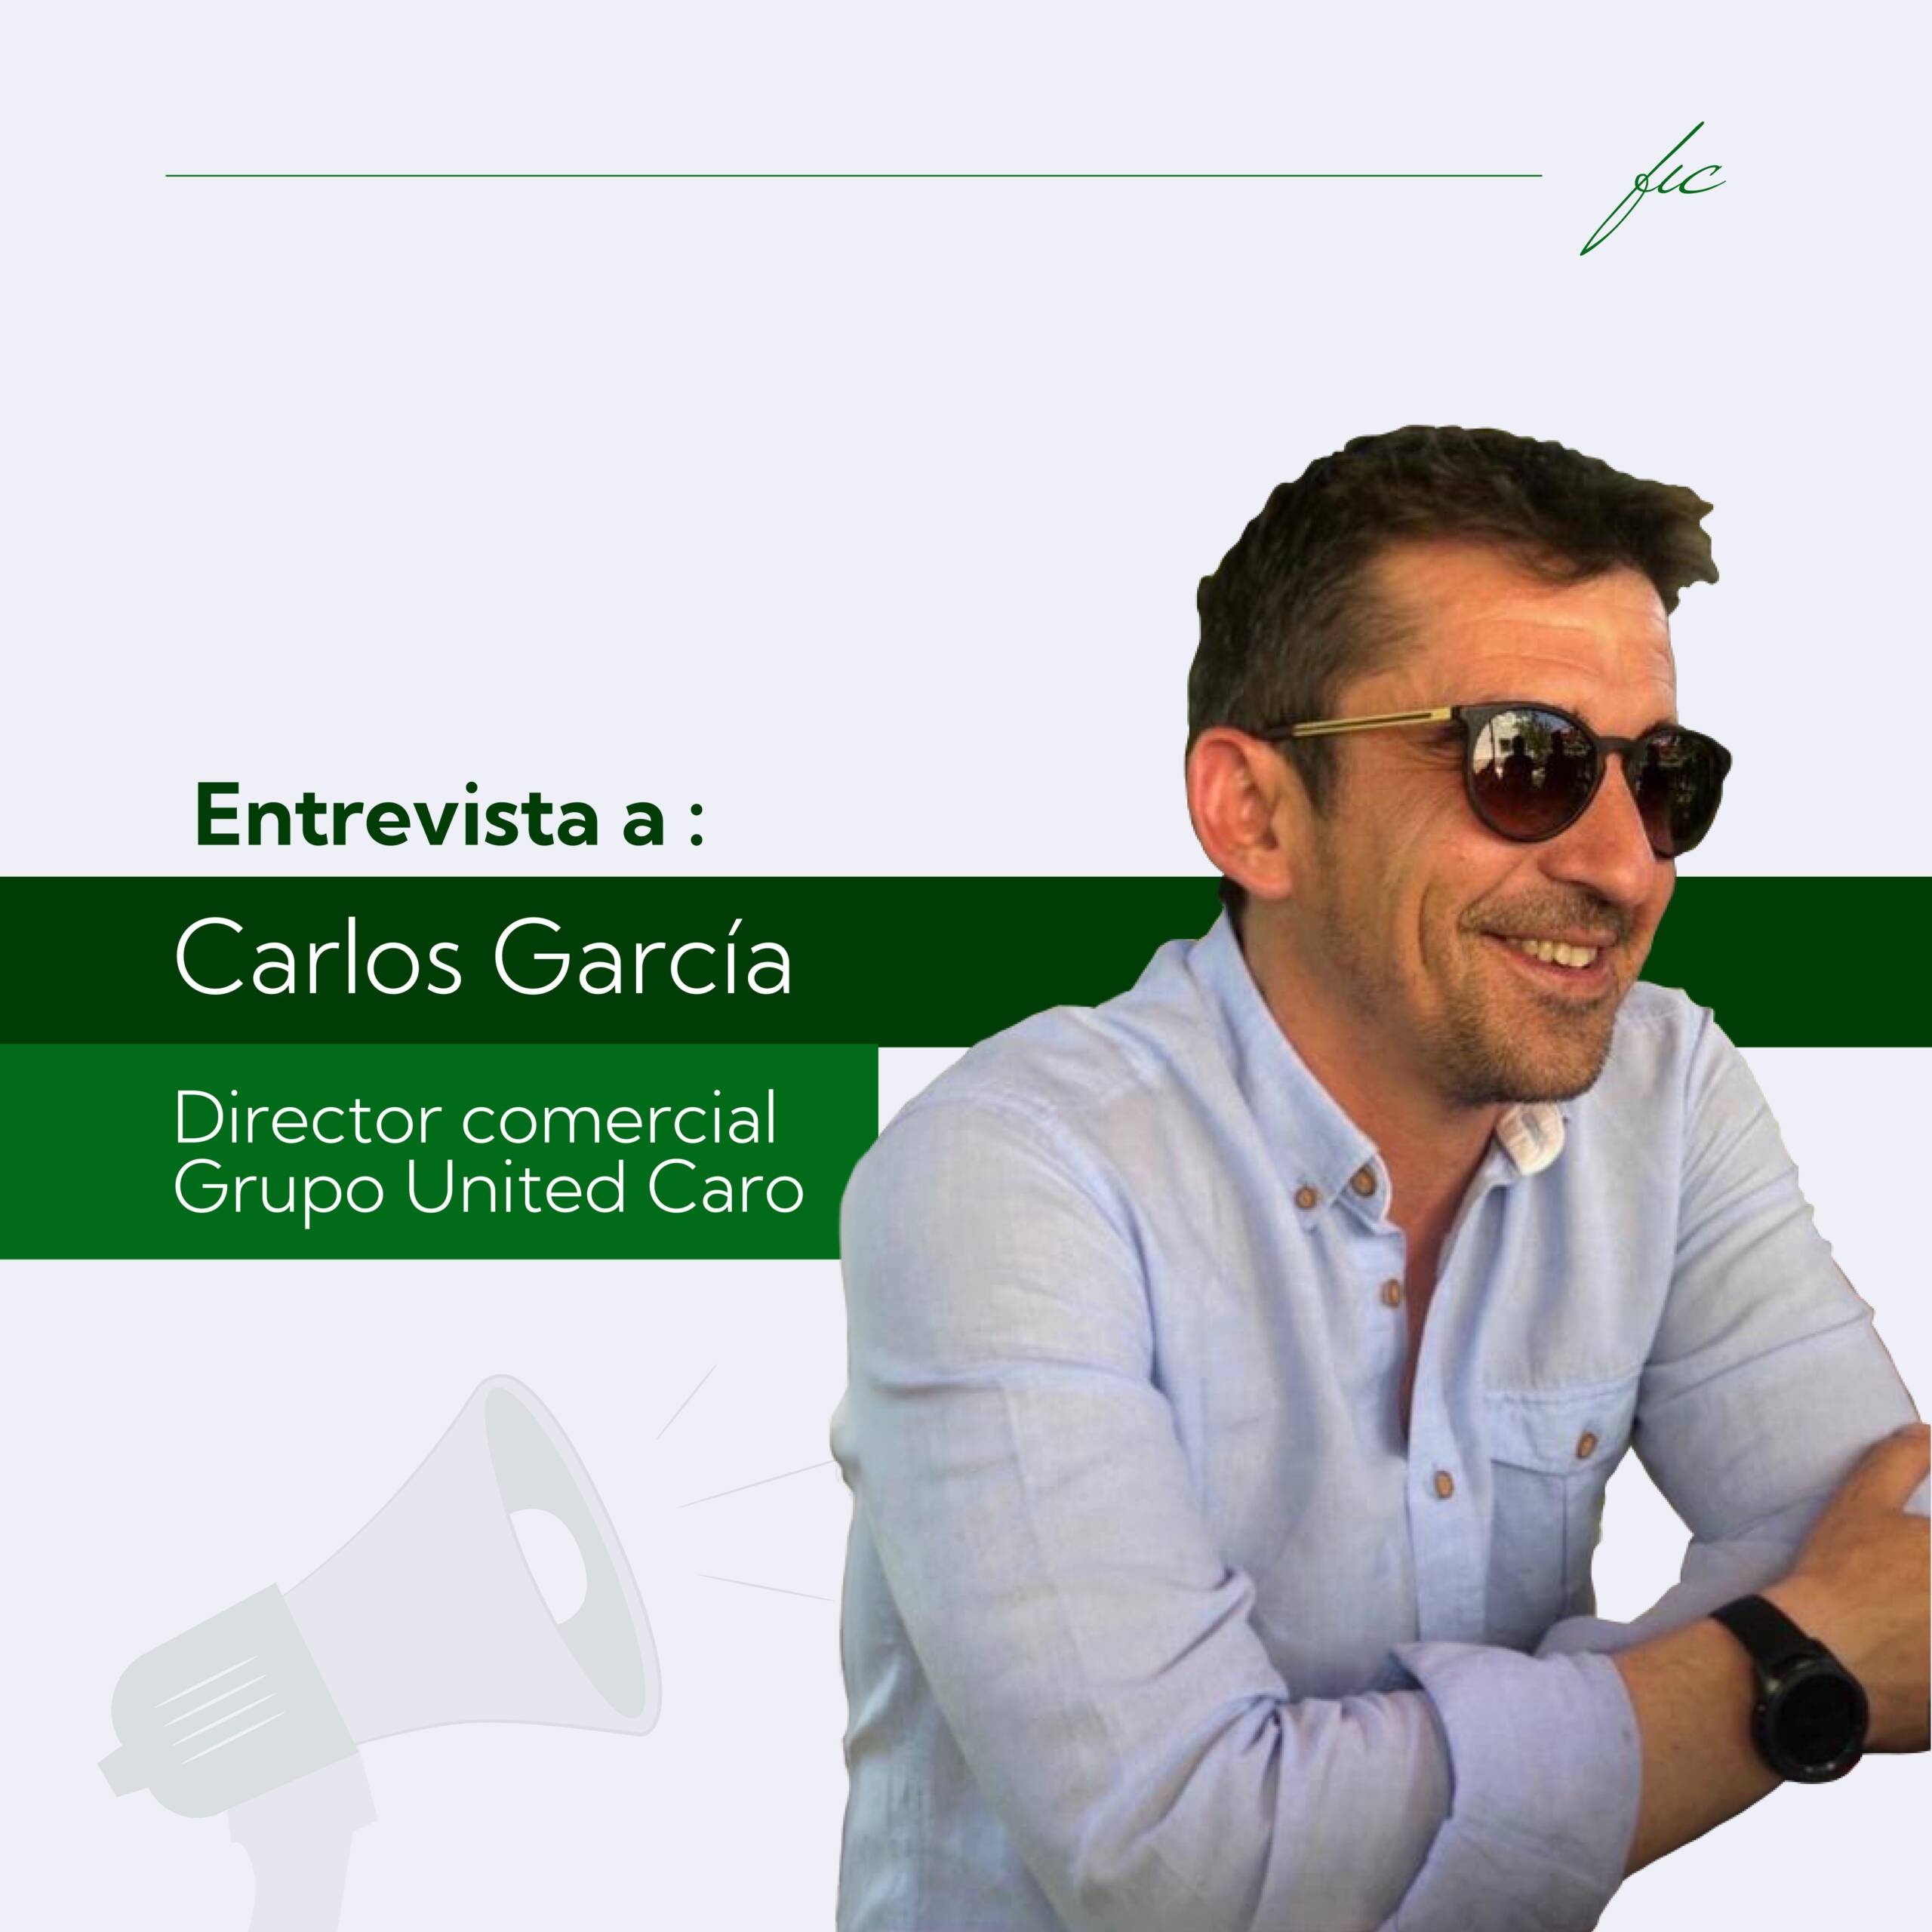 Director comercial Grupo United Caro